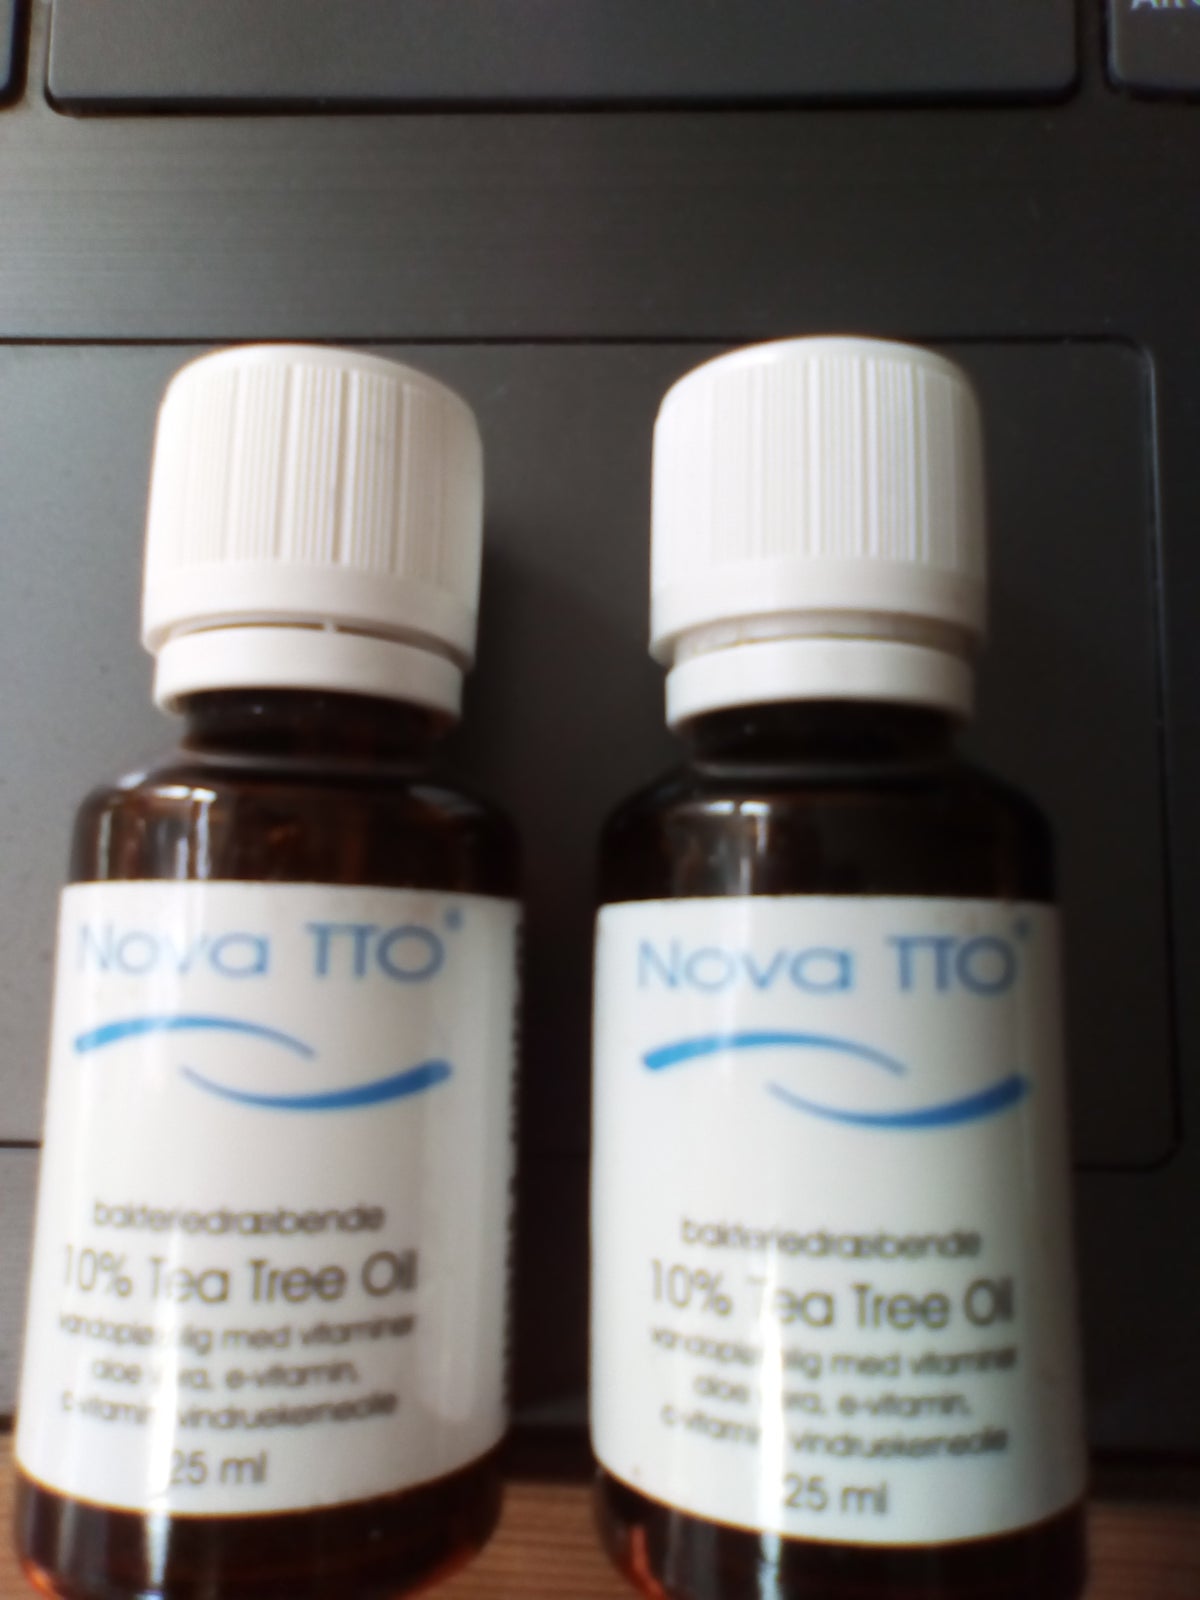 Andet, Nova TTO Tea Tree Oil, 25 ml.